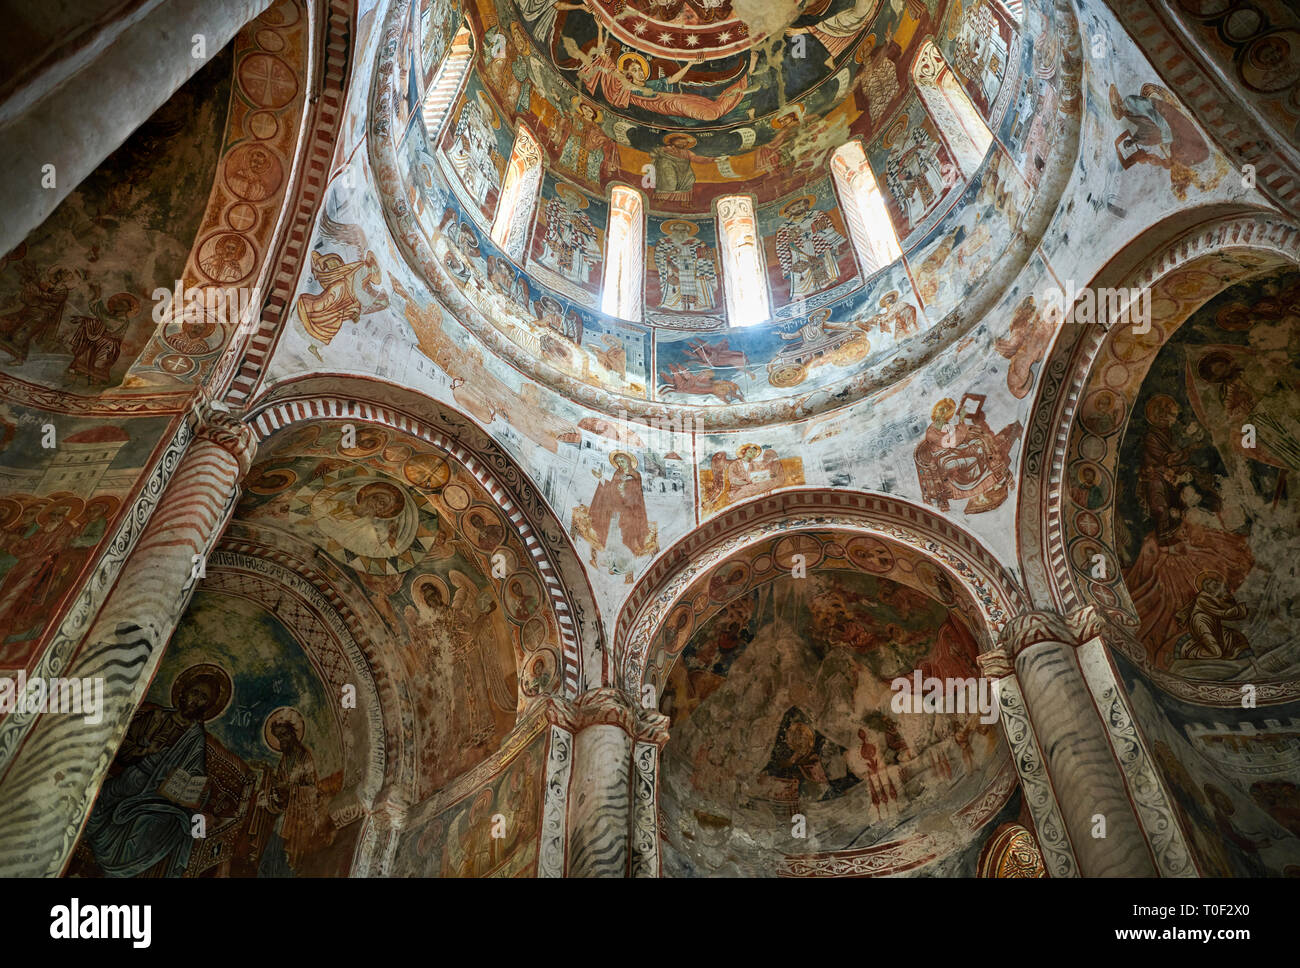 Pictures & images of Nikortsminda ( Nicortsminda ) St Nicholas Georgian Orthodox Cathedral rich interior frescoes of the cupola dome, 16th century, Ni Stock Photo